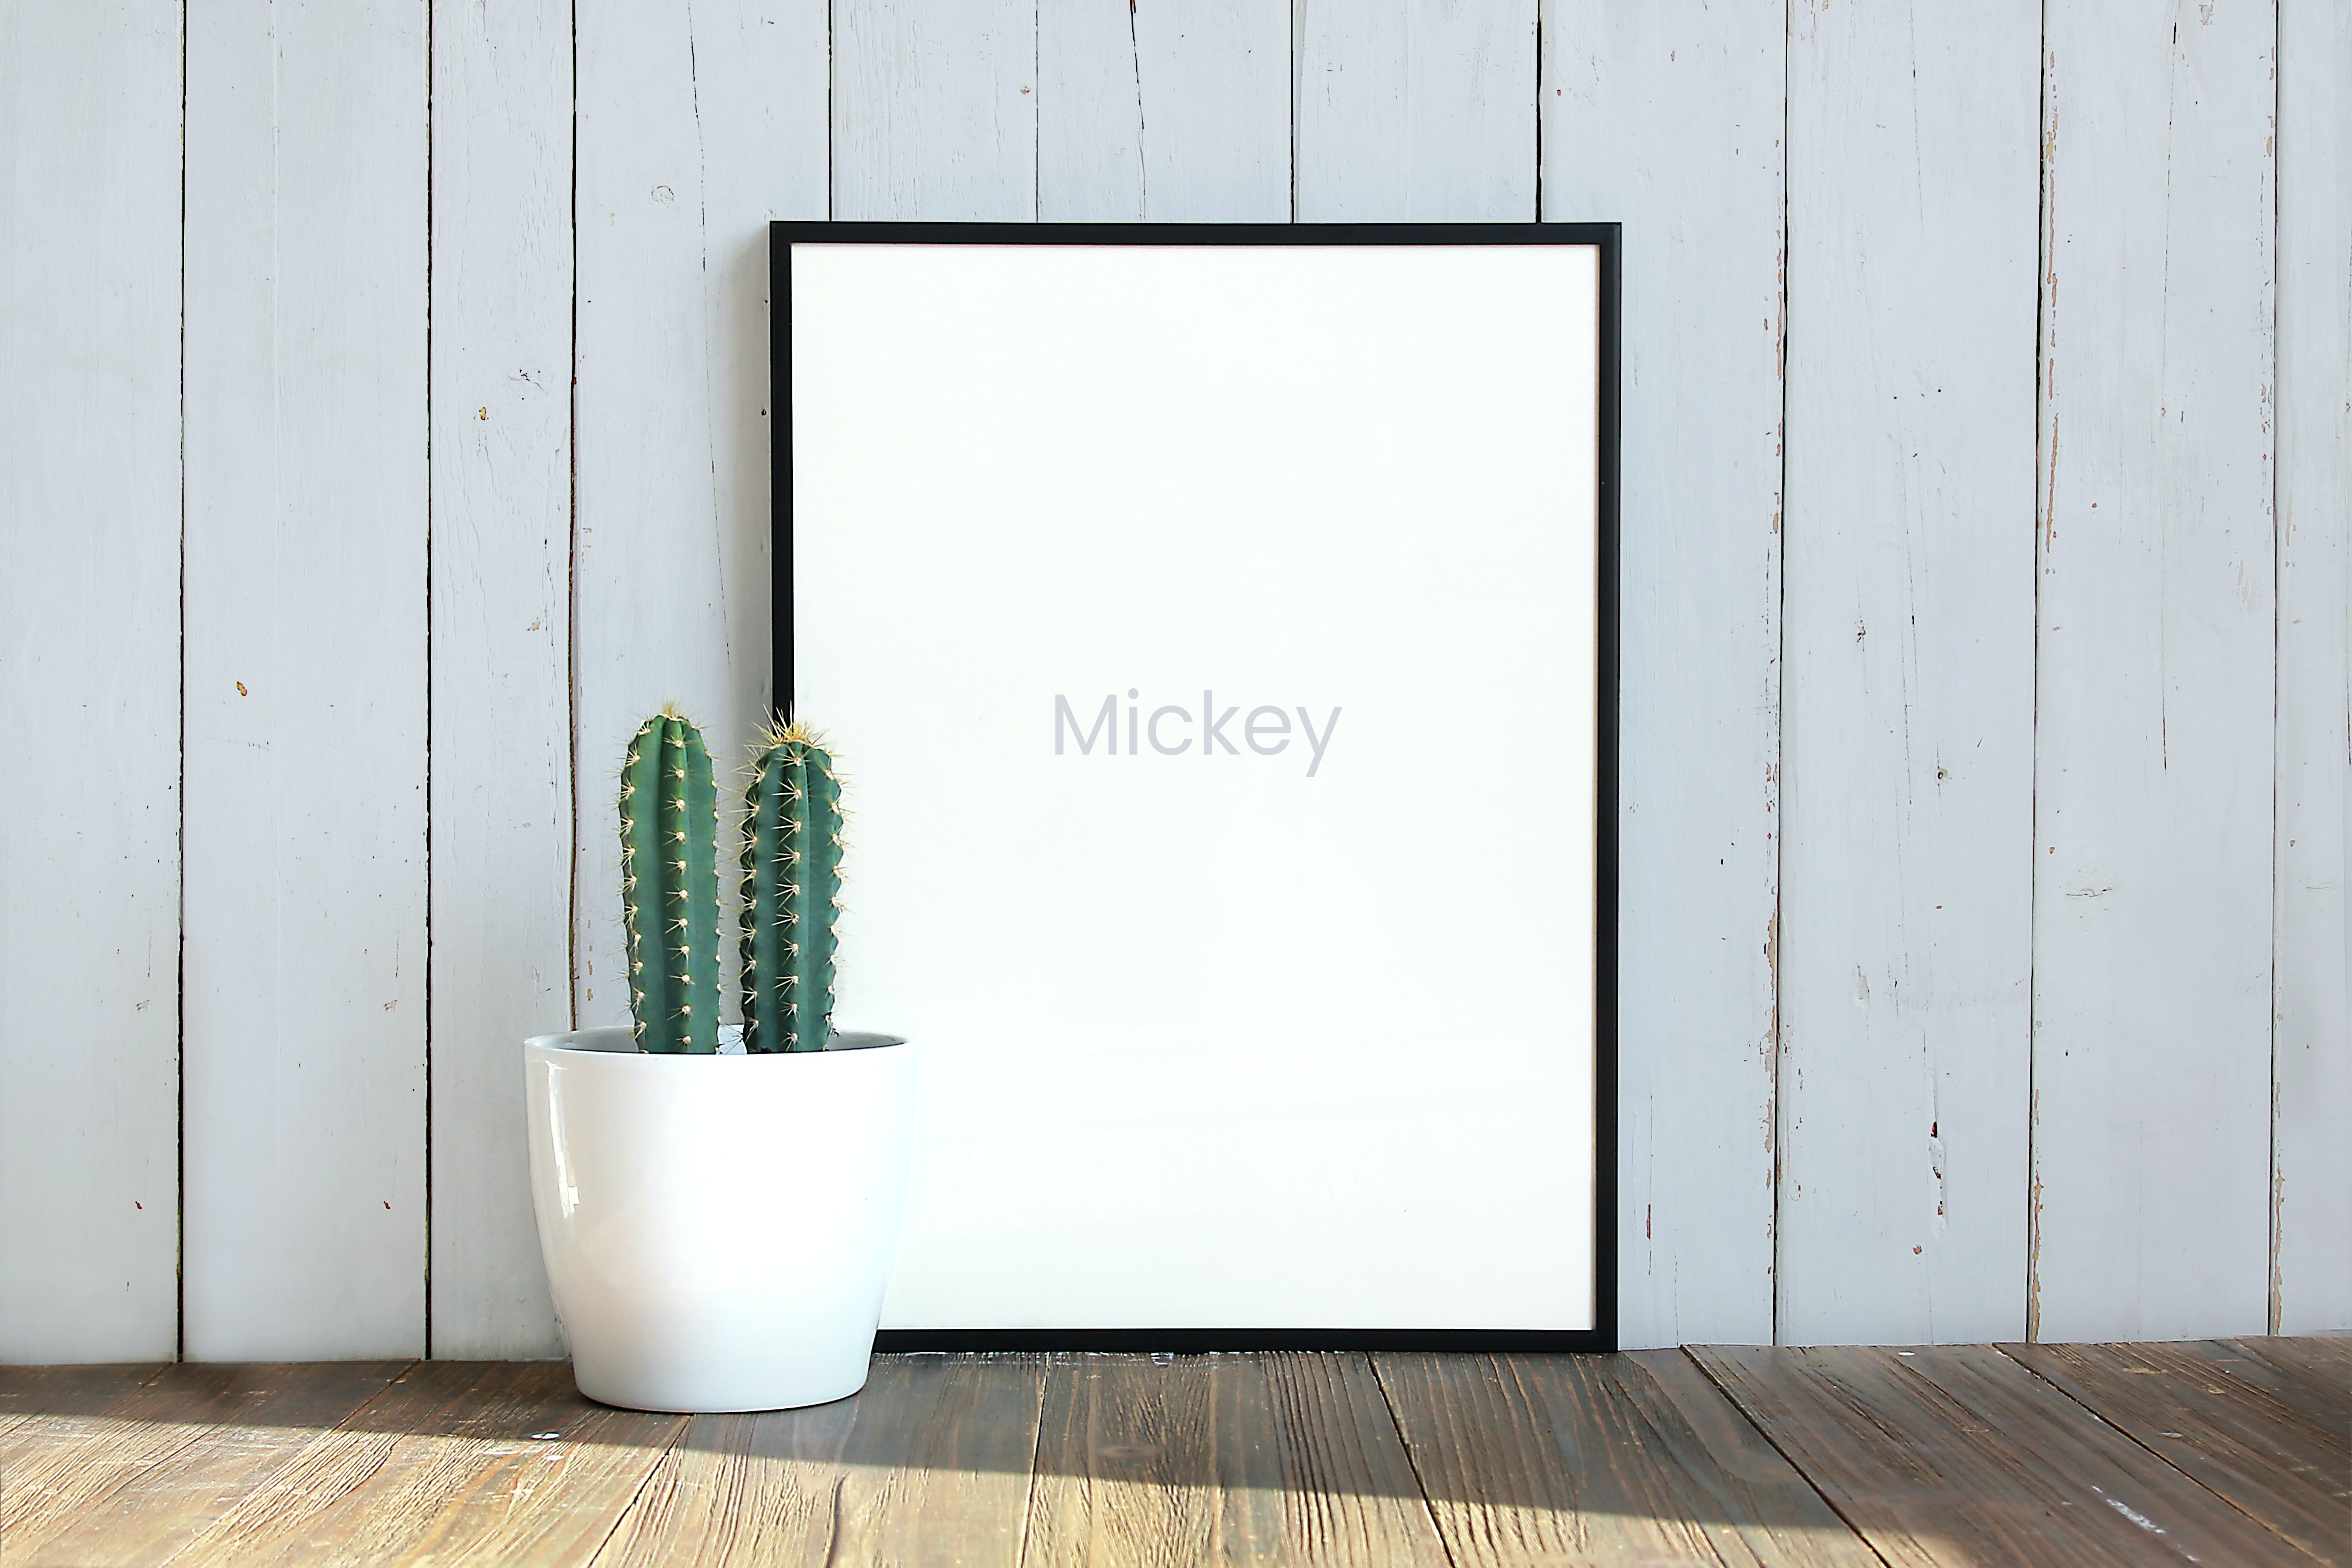 Mickey - Trim Paint